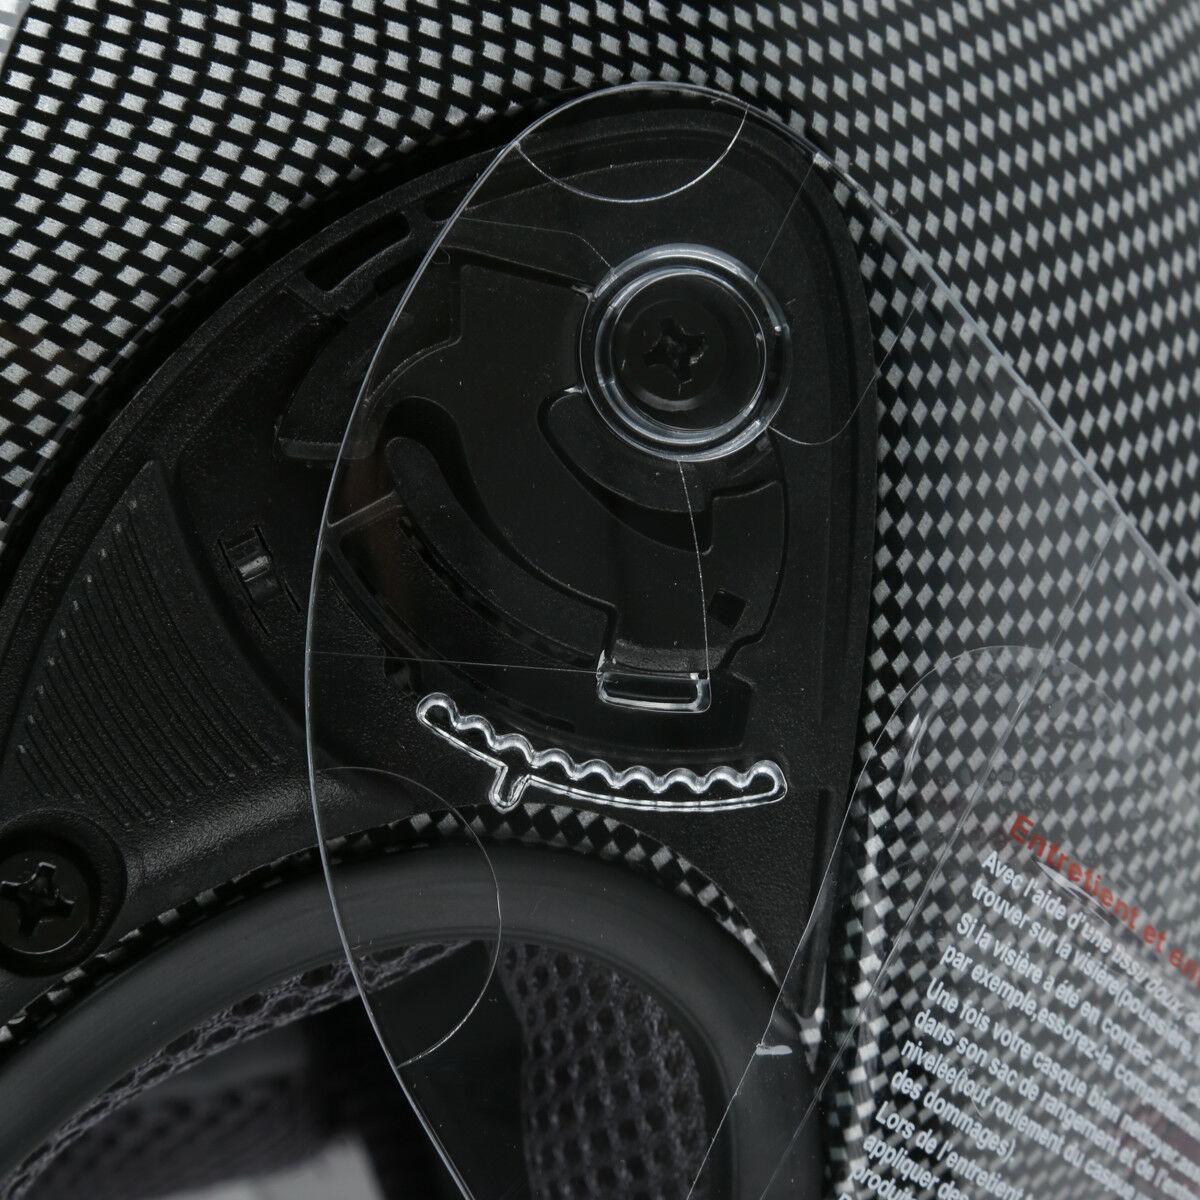 DOT Motorcycle Black Carbon Fiber Flip Up Full Face Street Helmet S M L XL XXL - Moto Life Products